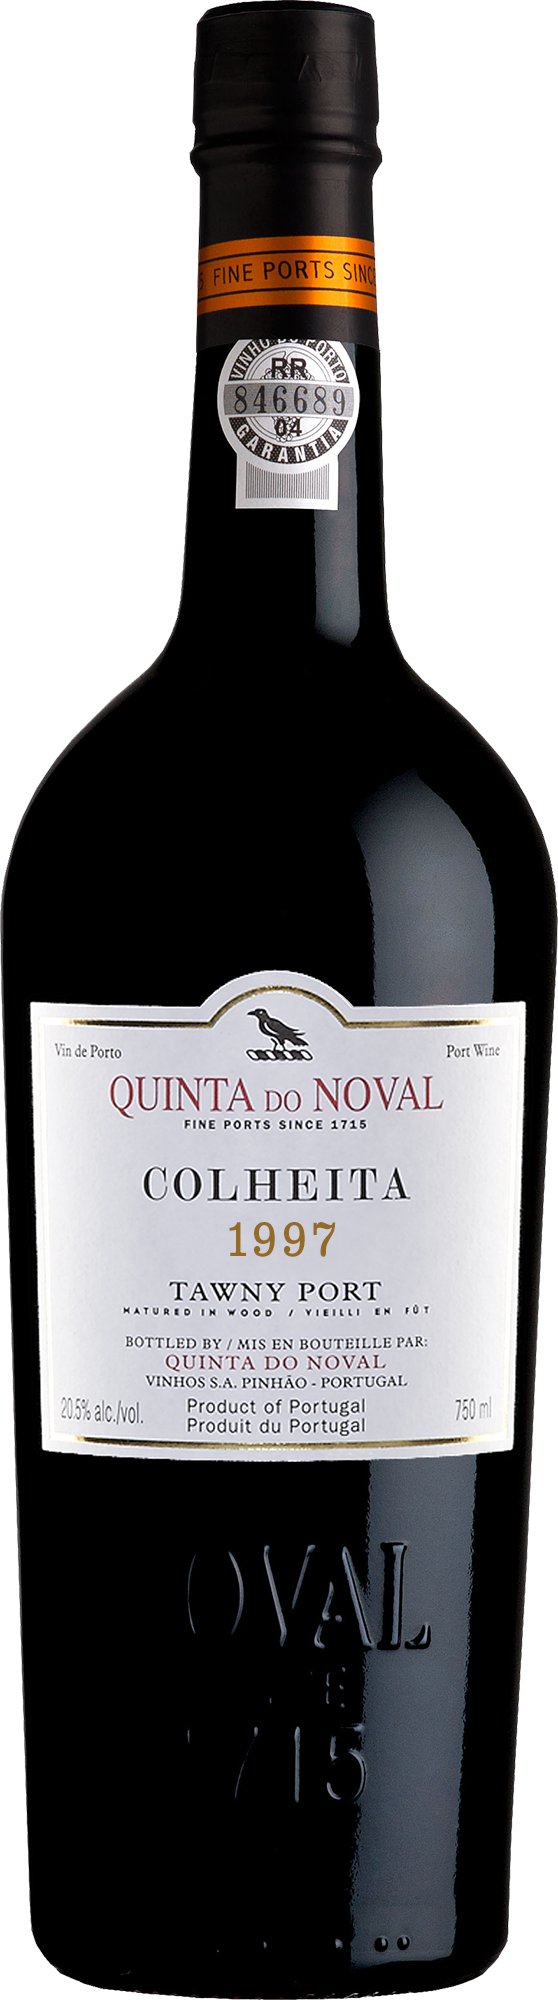 Quinta do Noval Tawny Port Colheita 1997 (with Gift Box)